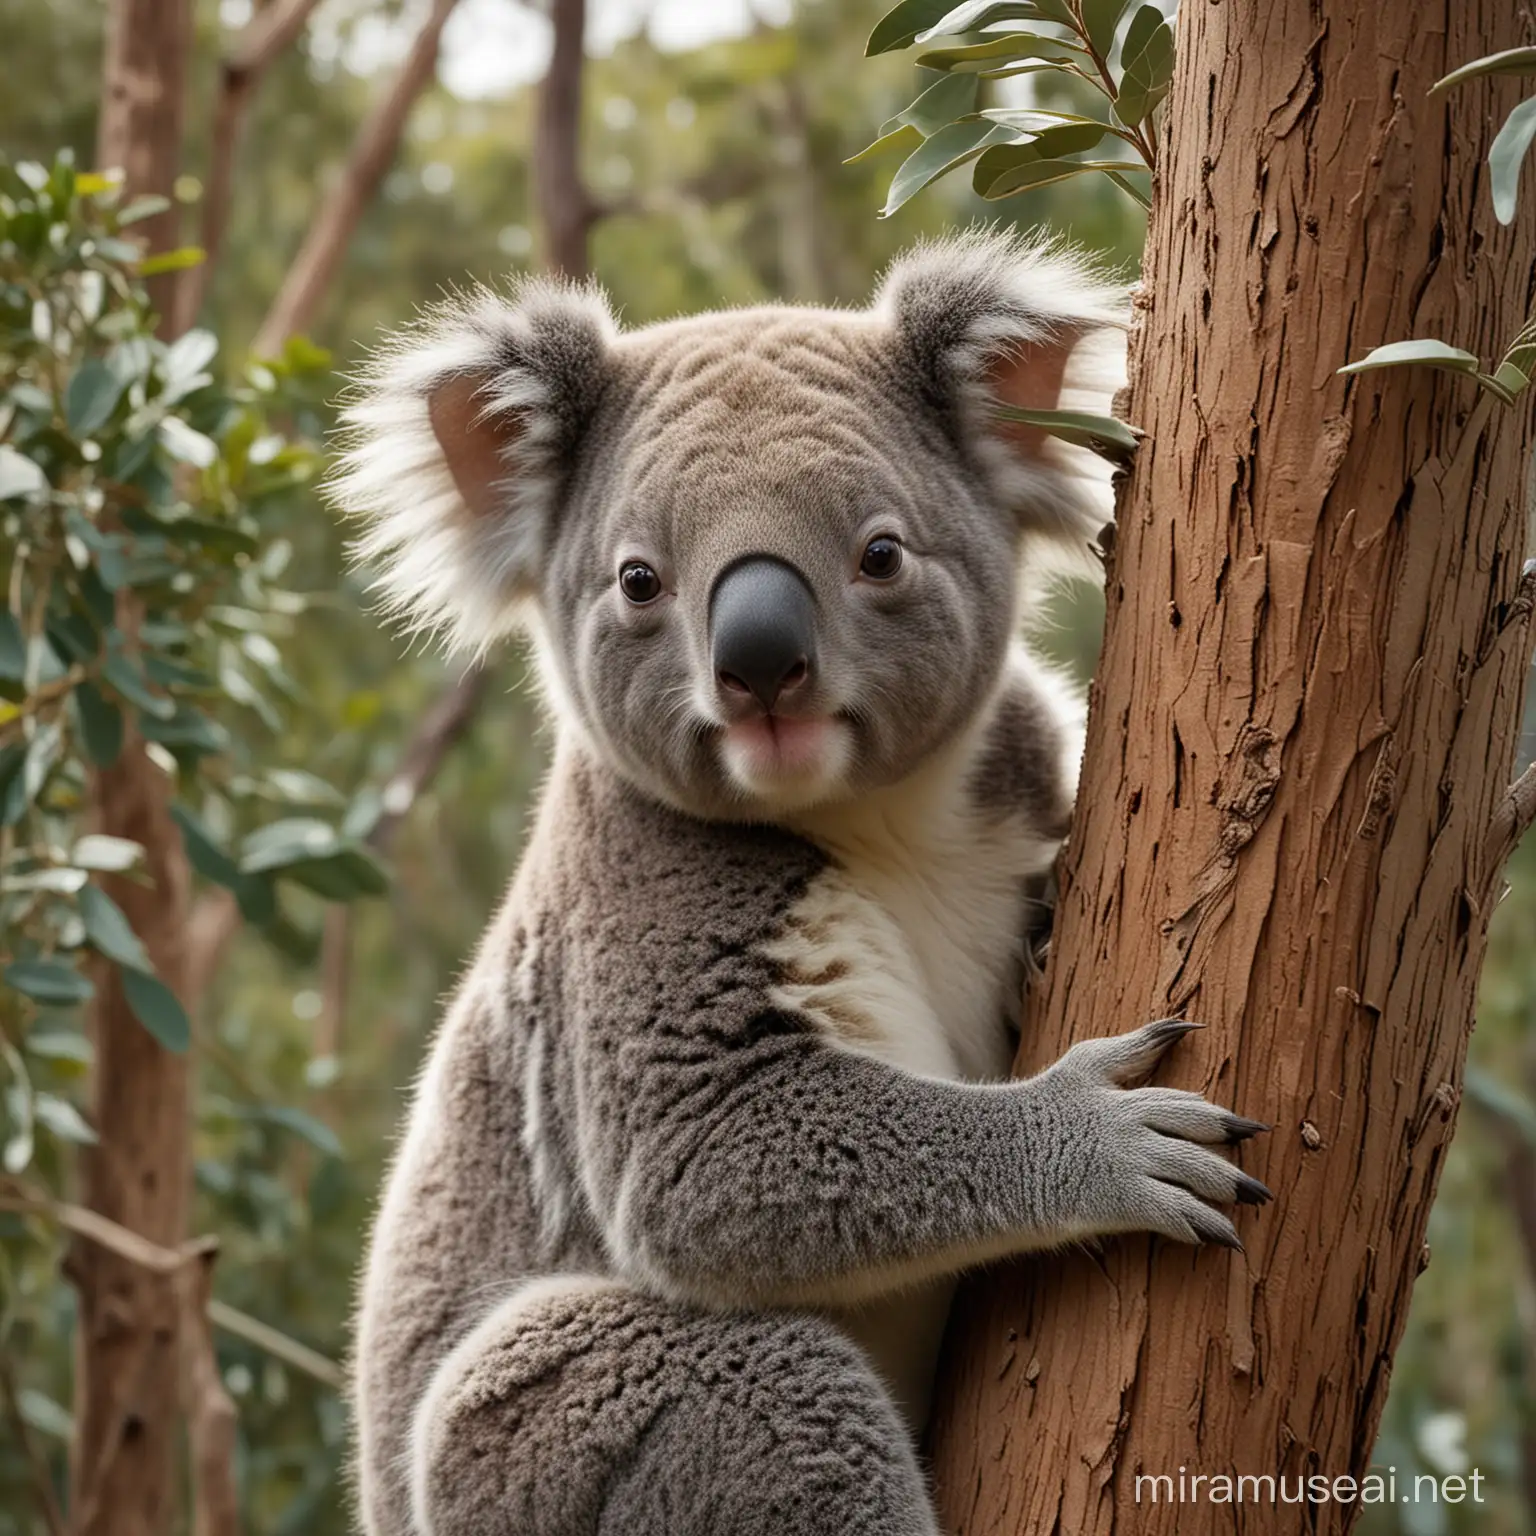 Cute Koala Clinging to Eucalyptus Tree in Australian Bush